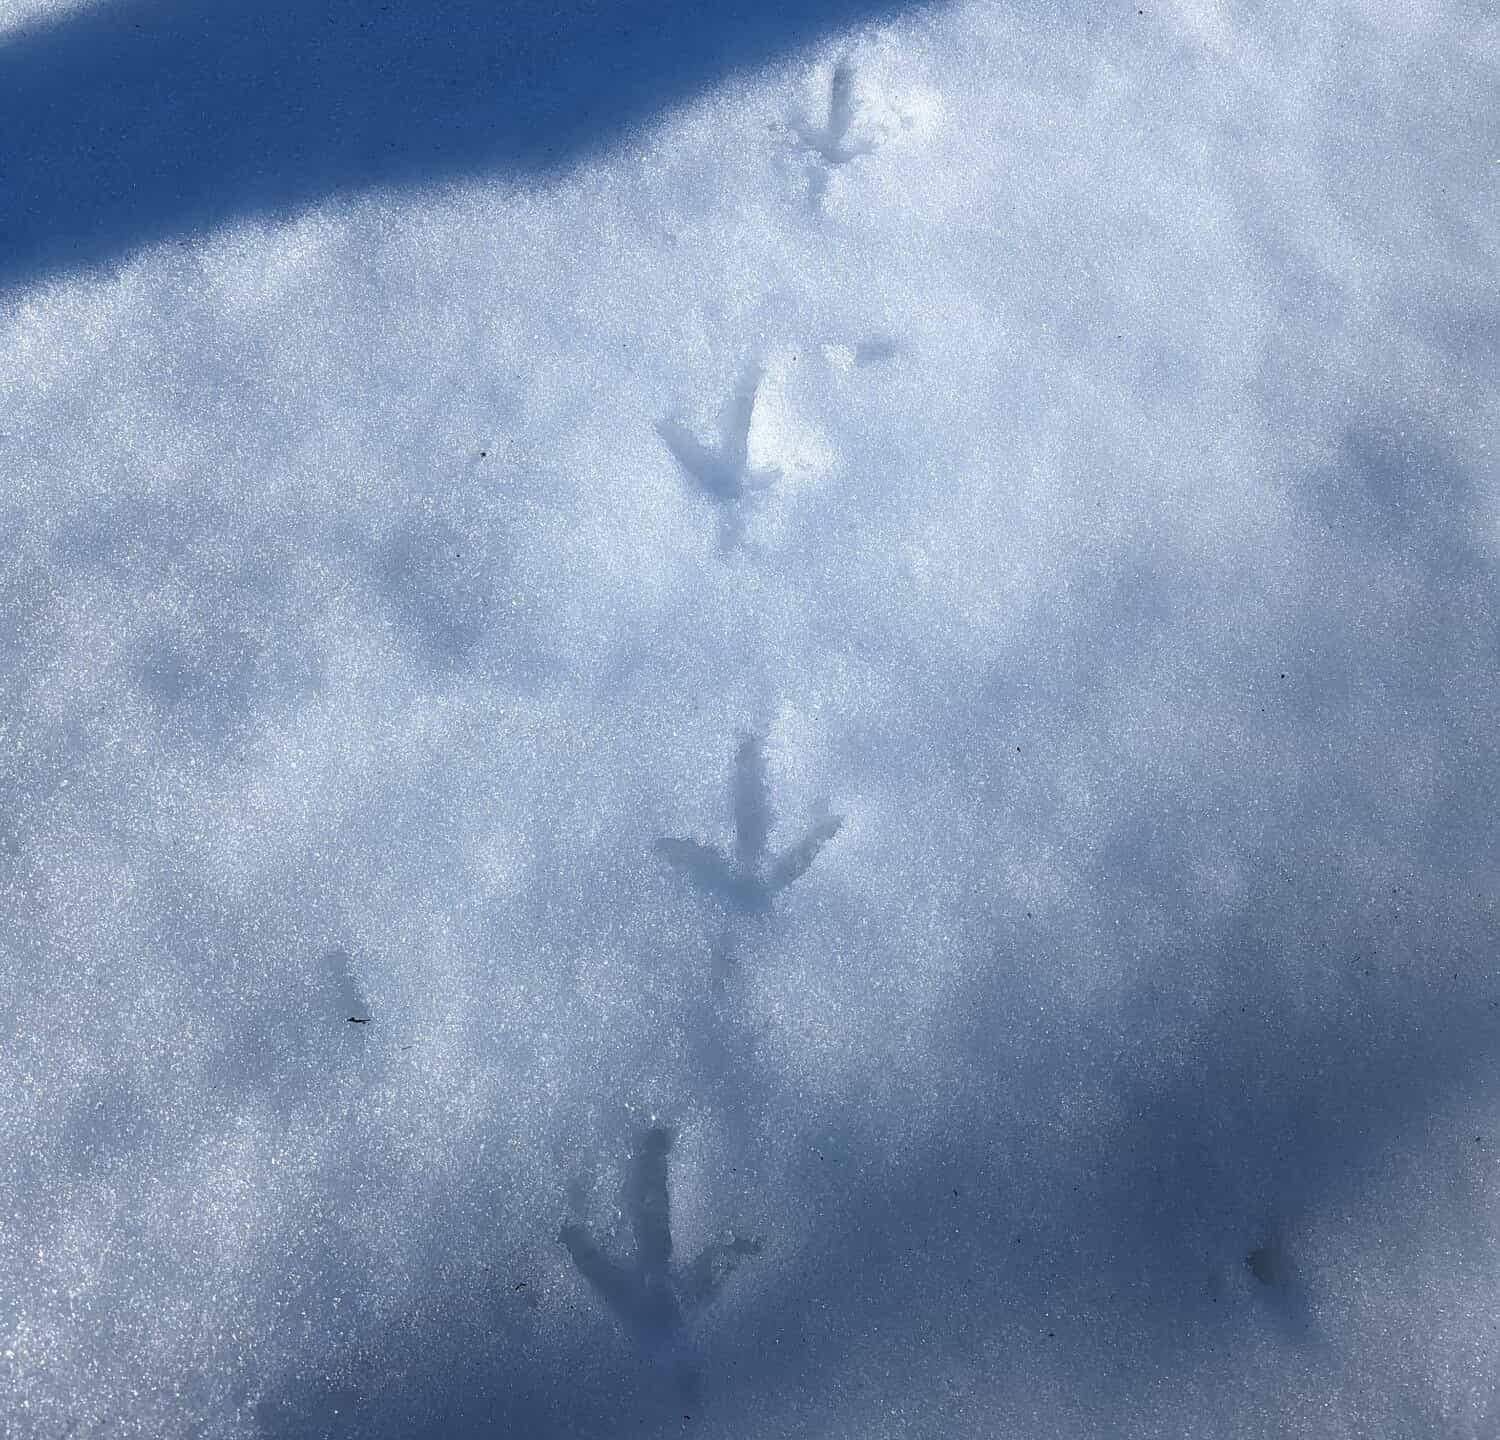 Fresh turkey tracks in the snow